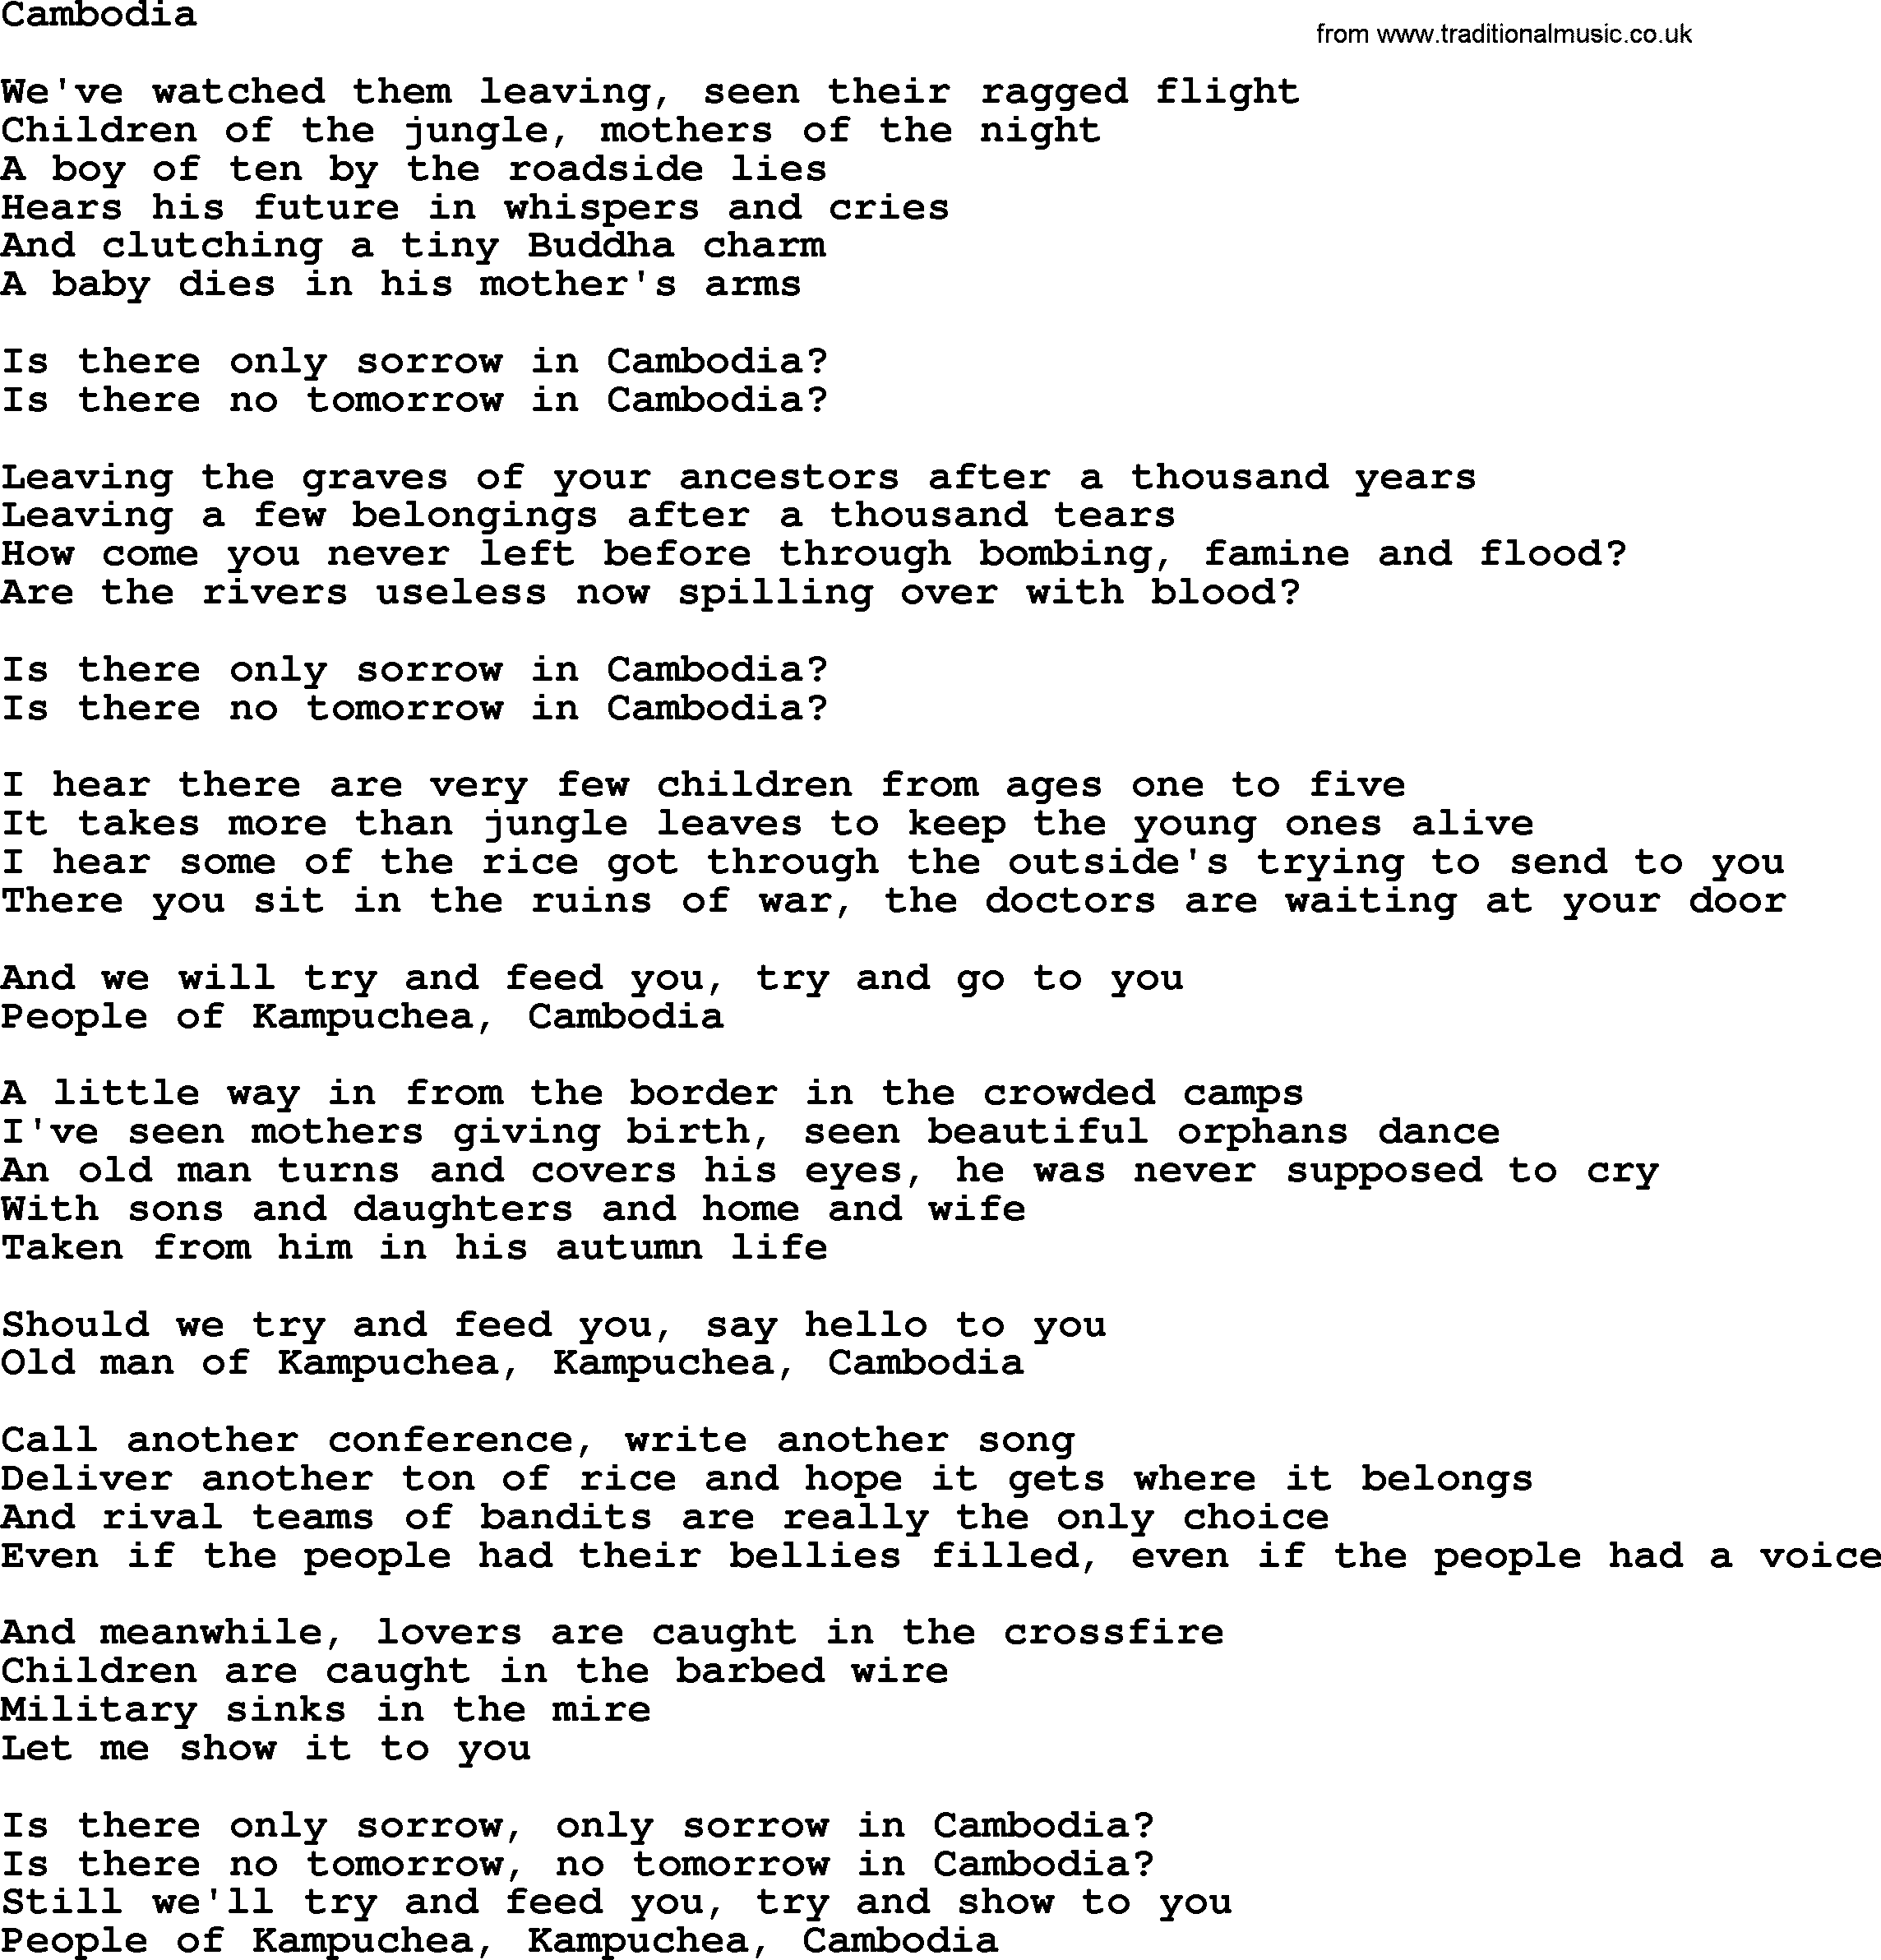 Joan Baez song Cambodia, lyrics